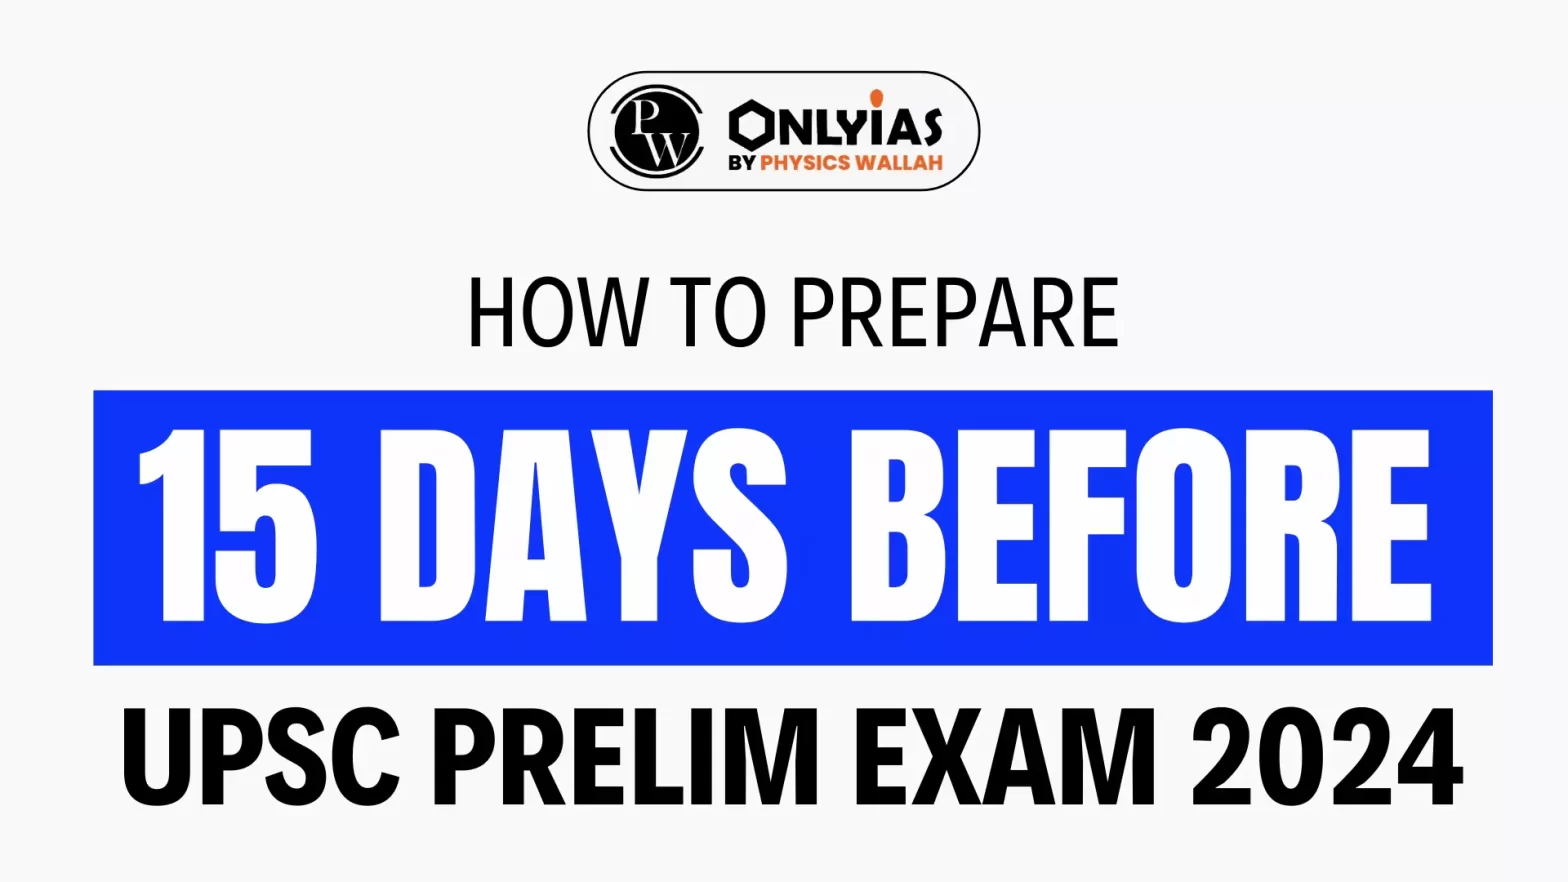 How to Prepare 15 Days Before UPSC Prelim Exam 2024